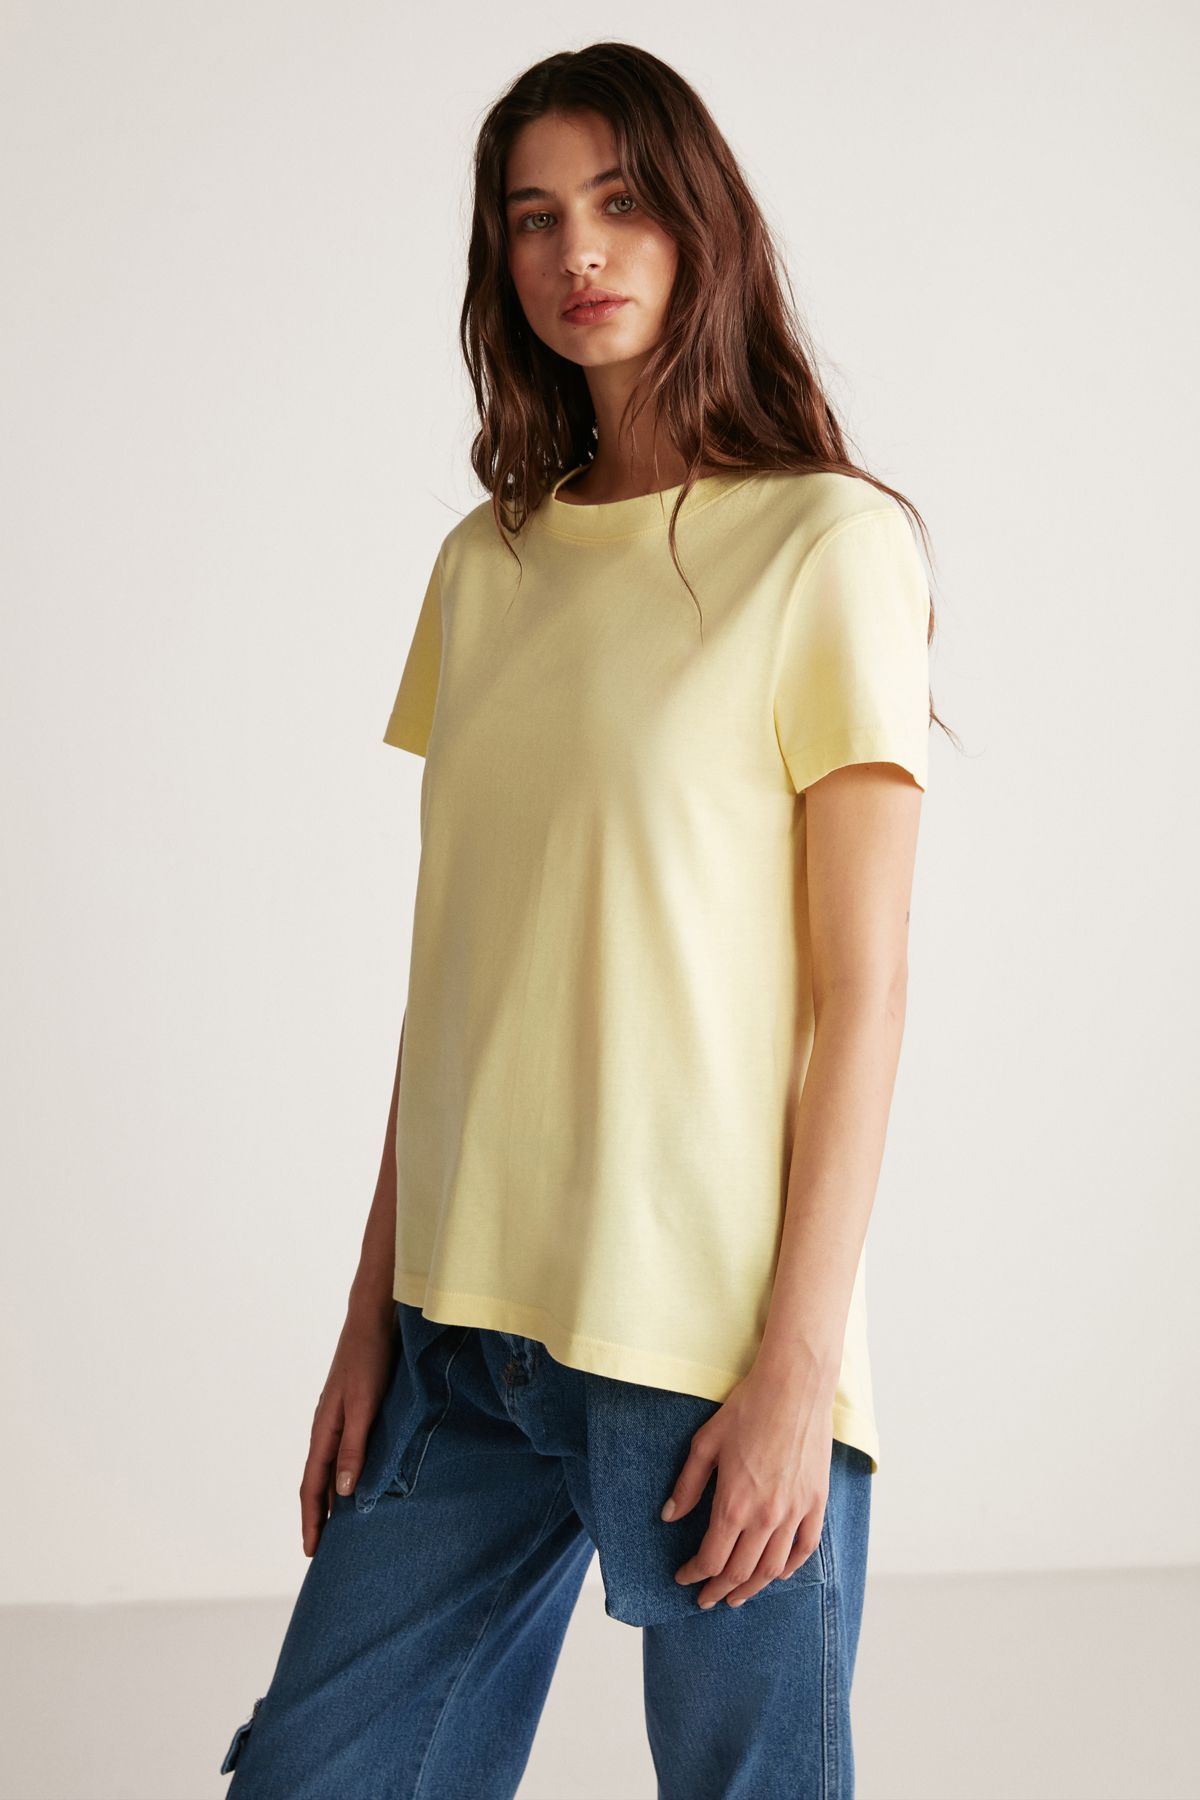 GRIMELANGE Samantha Kadın Bisiklet Yaka %100 Pamuk Açık Sarı T-shirt